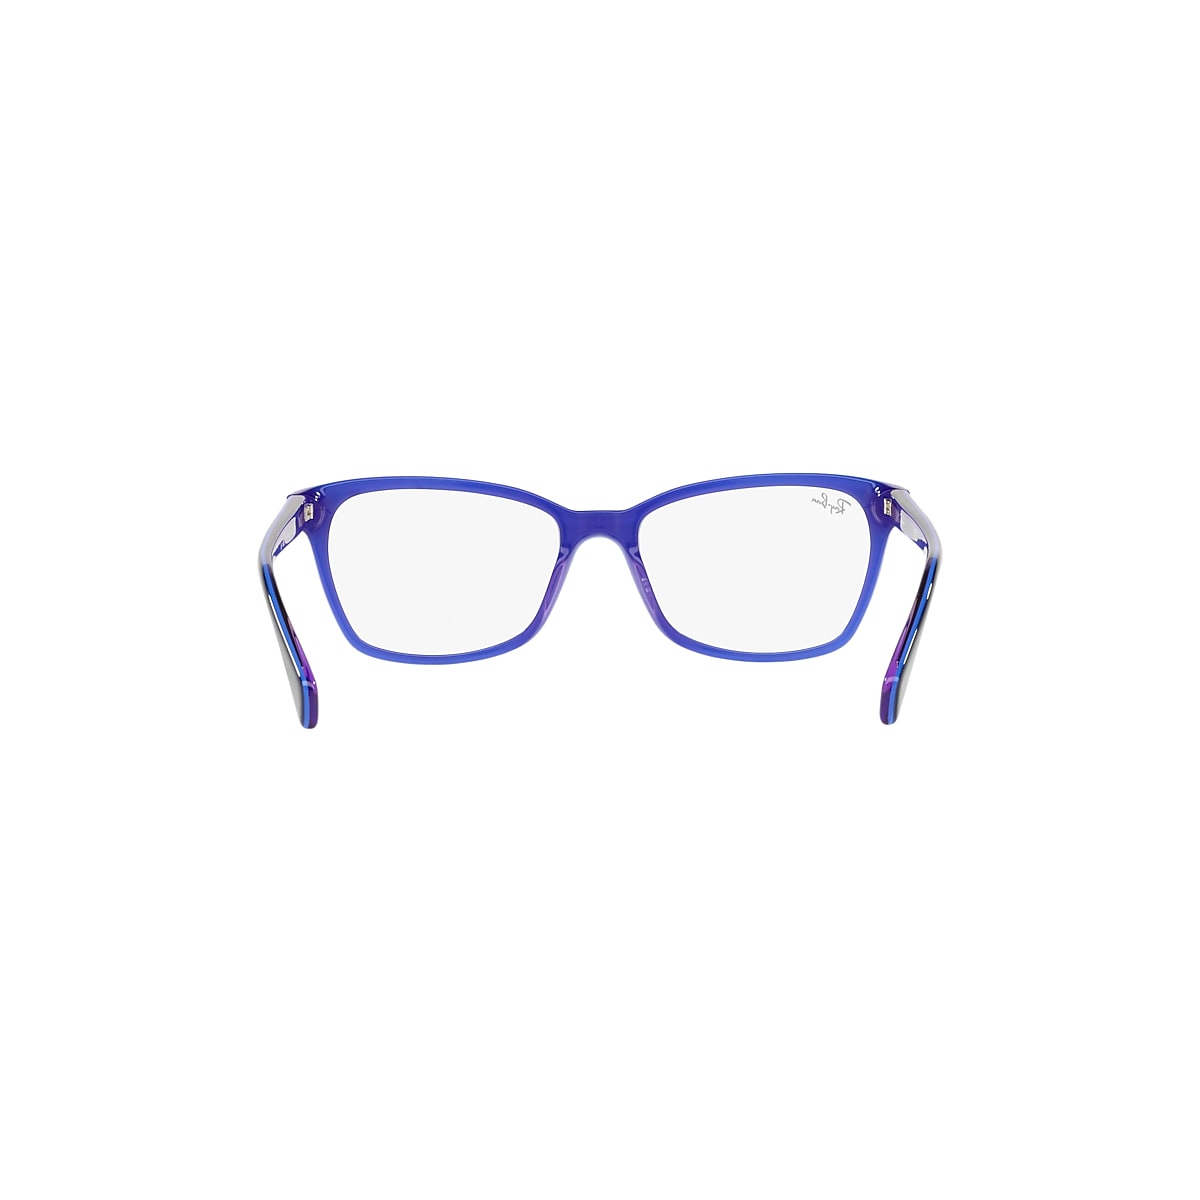 RB5362 OPTICS Eyeglasses with Blue Frame - RB5362 | Ray-Ban® US